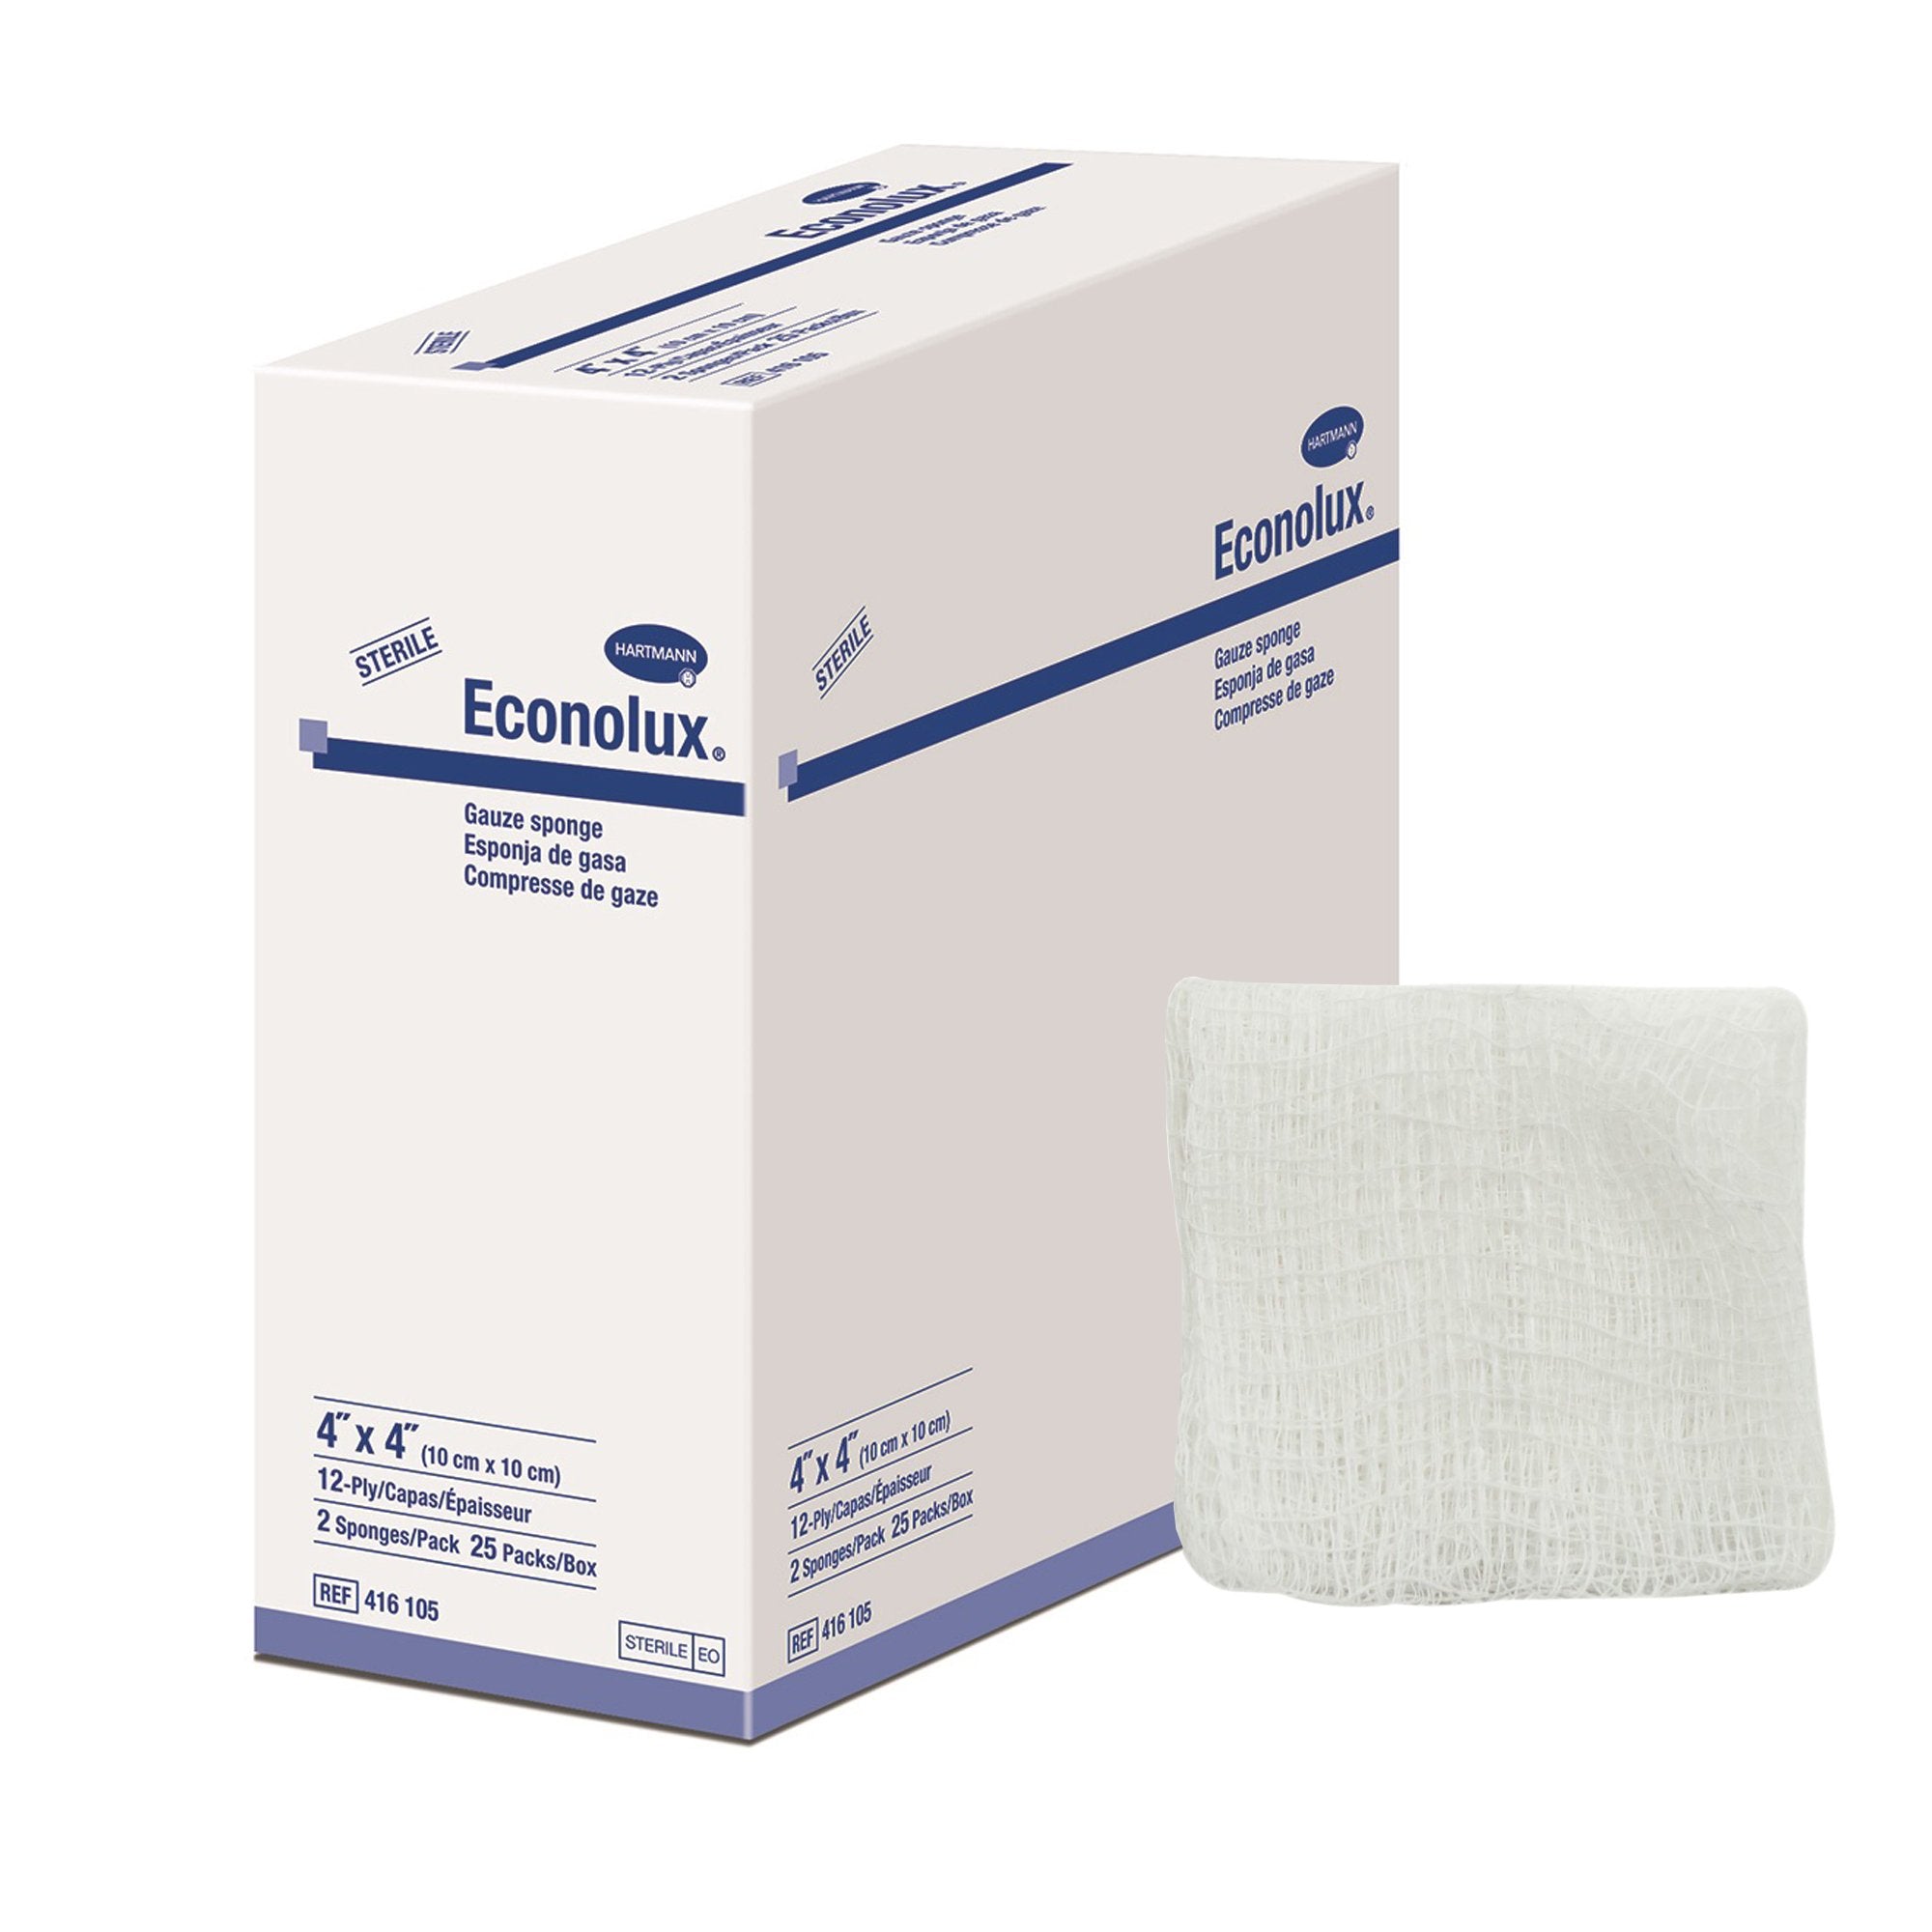 Gauze Sponge Econolux® 4 X 4 Inch 2 per Pack Sterile 12-Ply Square